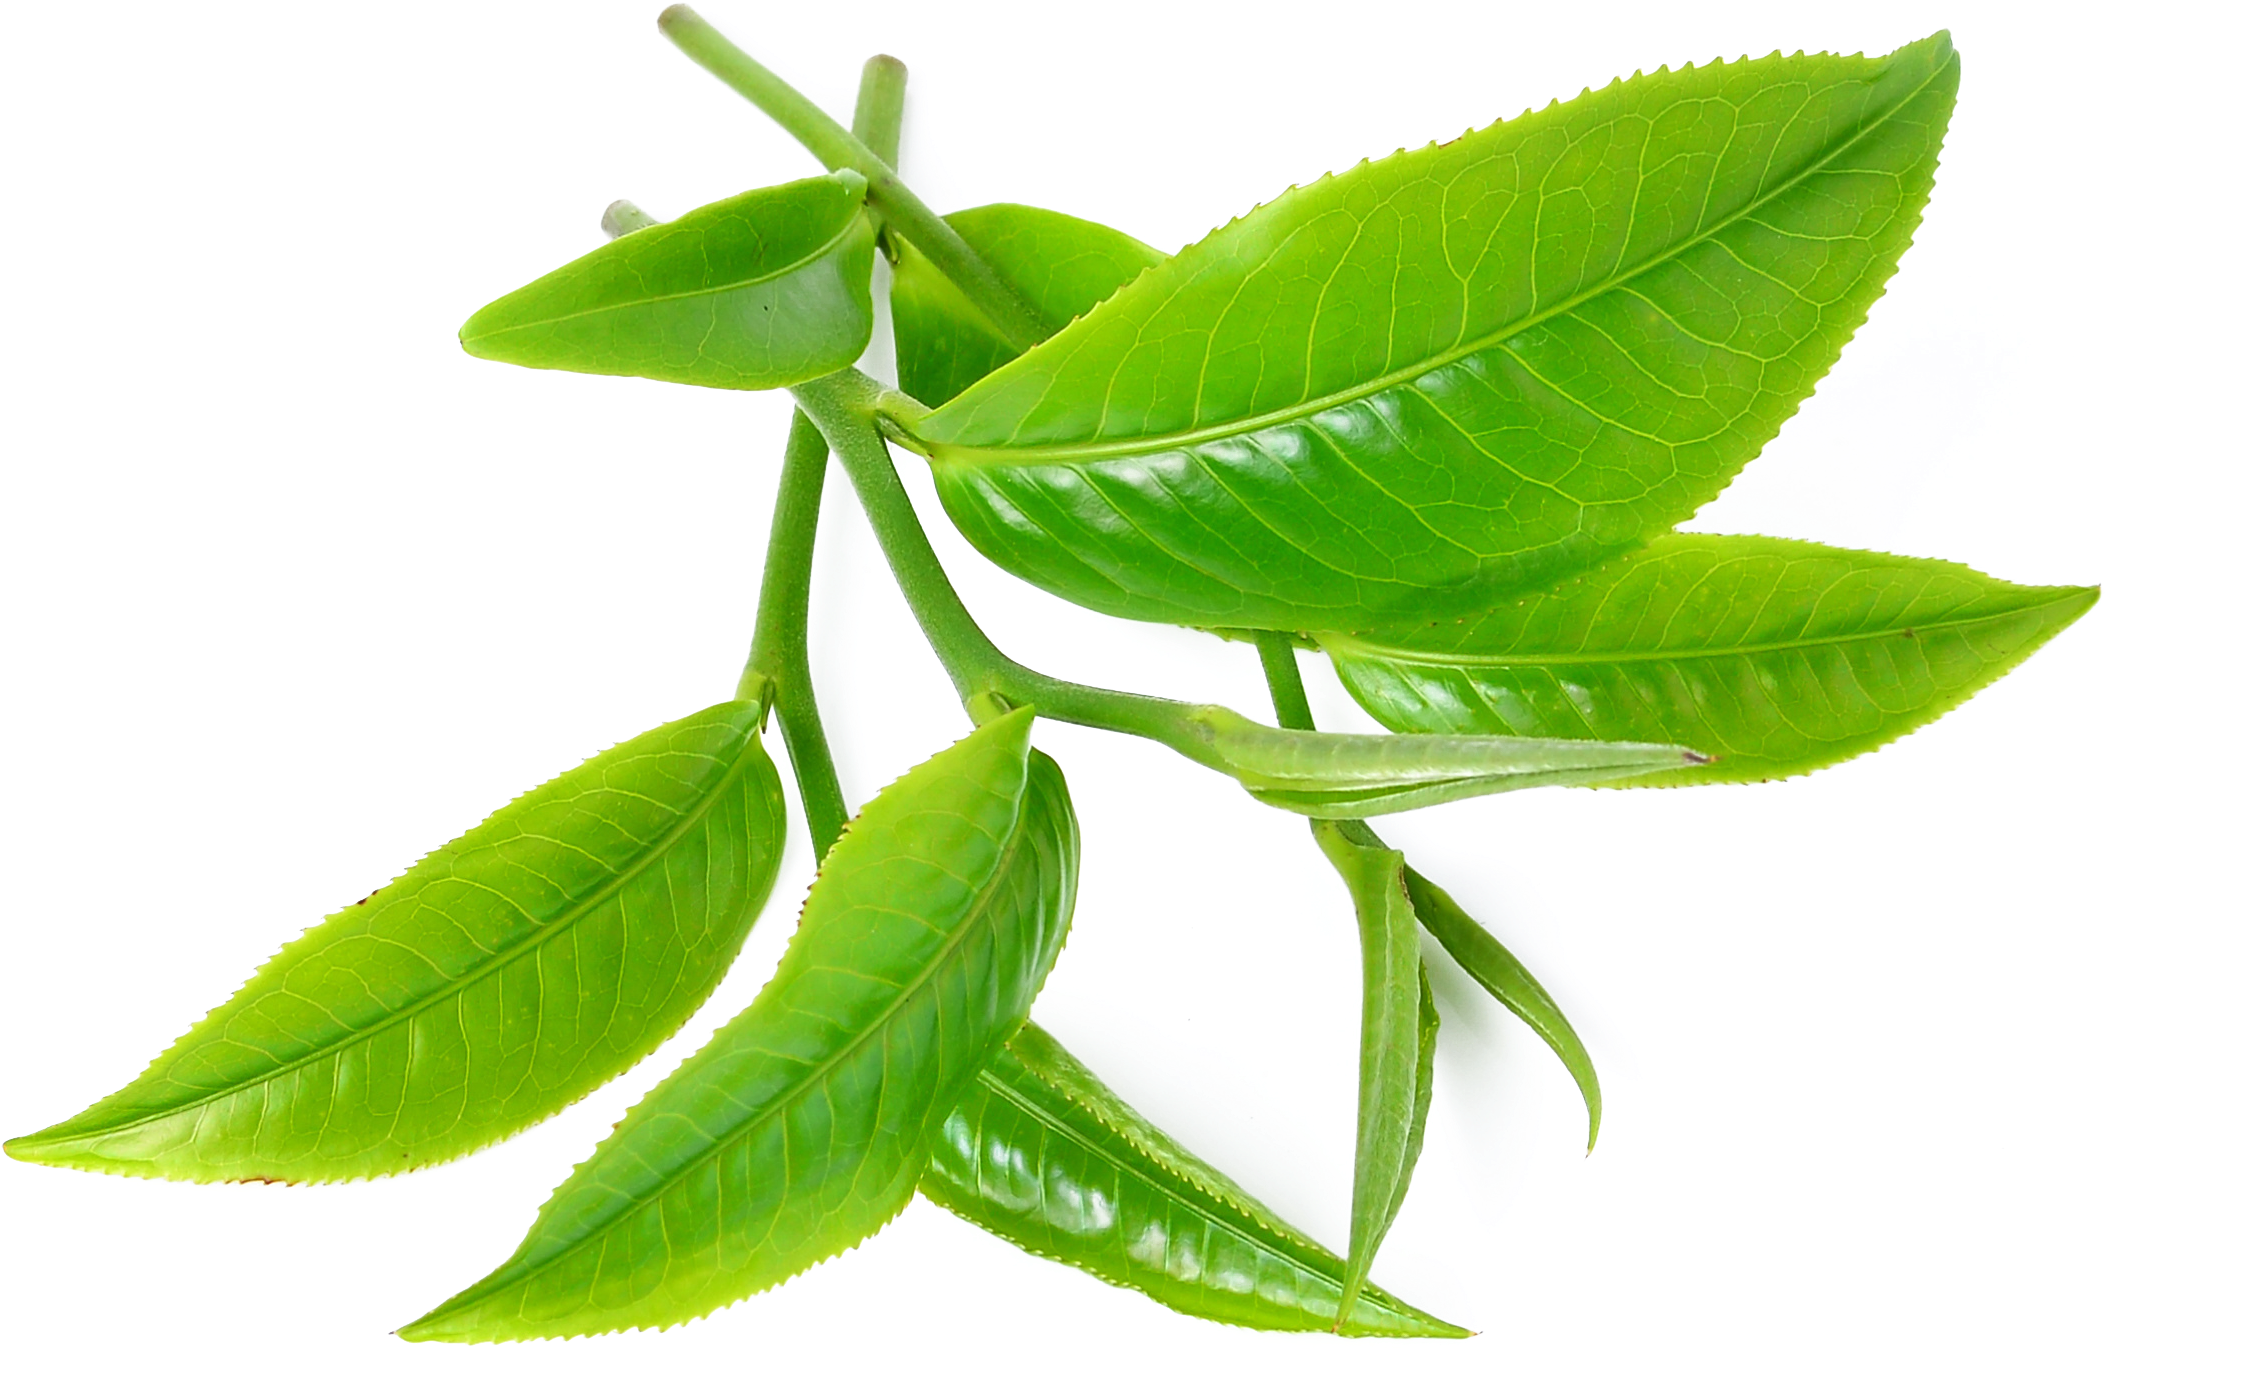 Green Tea Tea Tree Oil Camellia Sinensis - Treat Sti At Home (2404x1665)